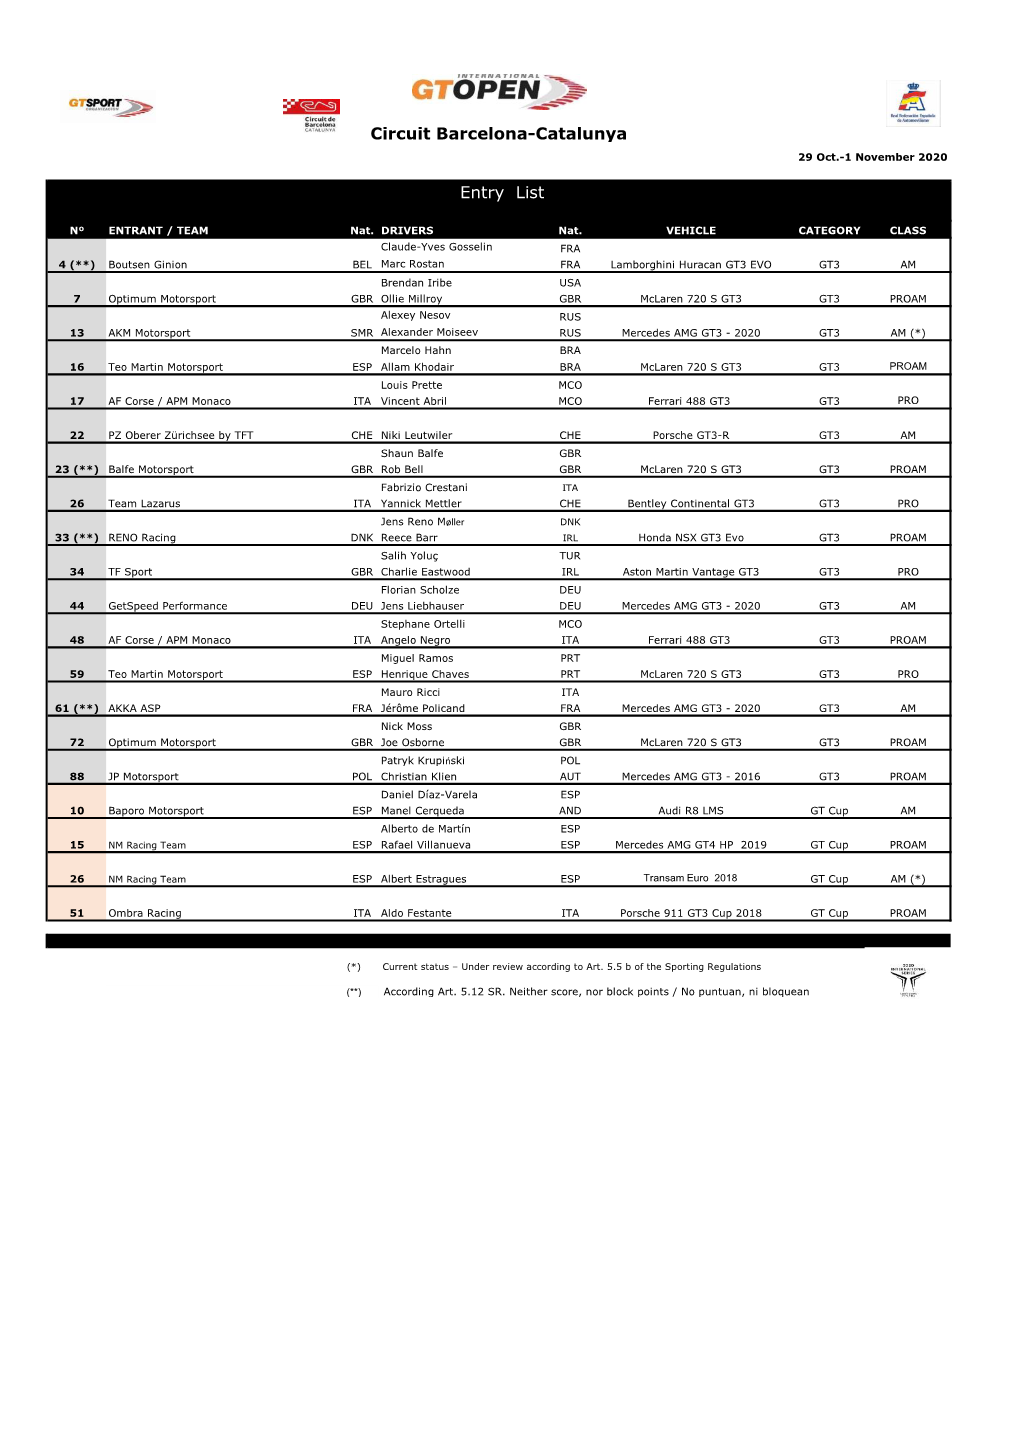 Circuit Barcelona-Catalunya Entry List